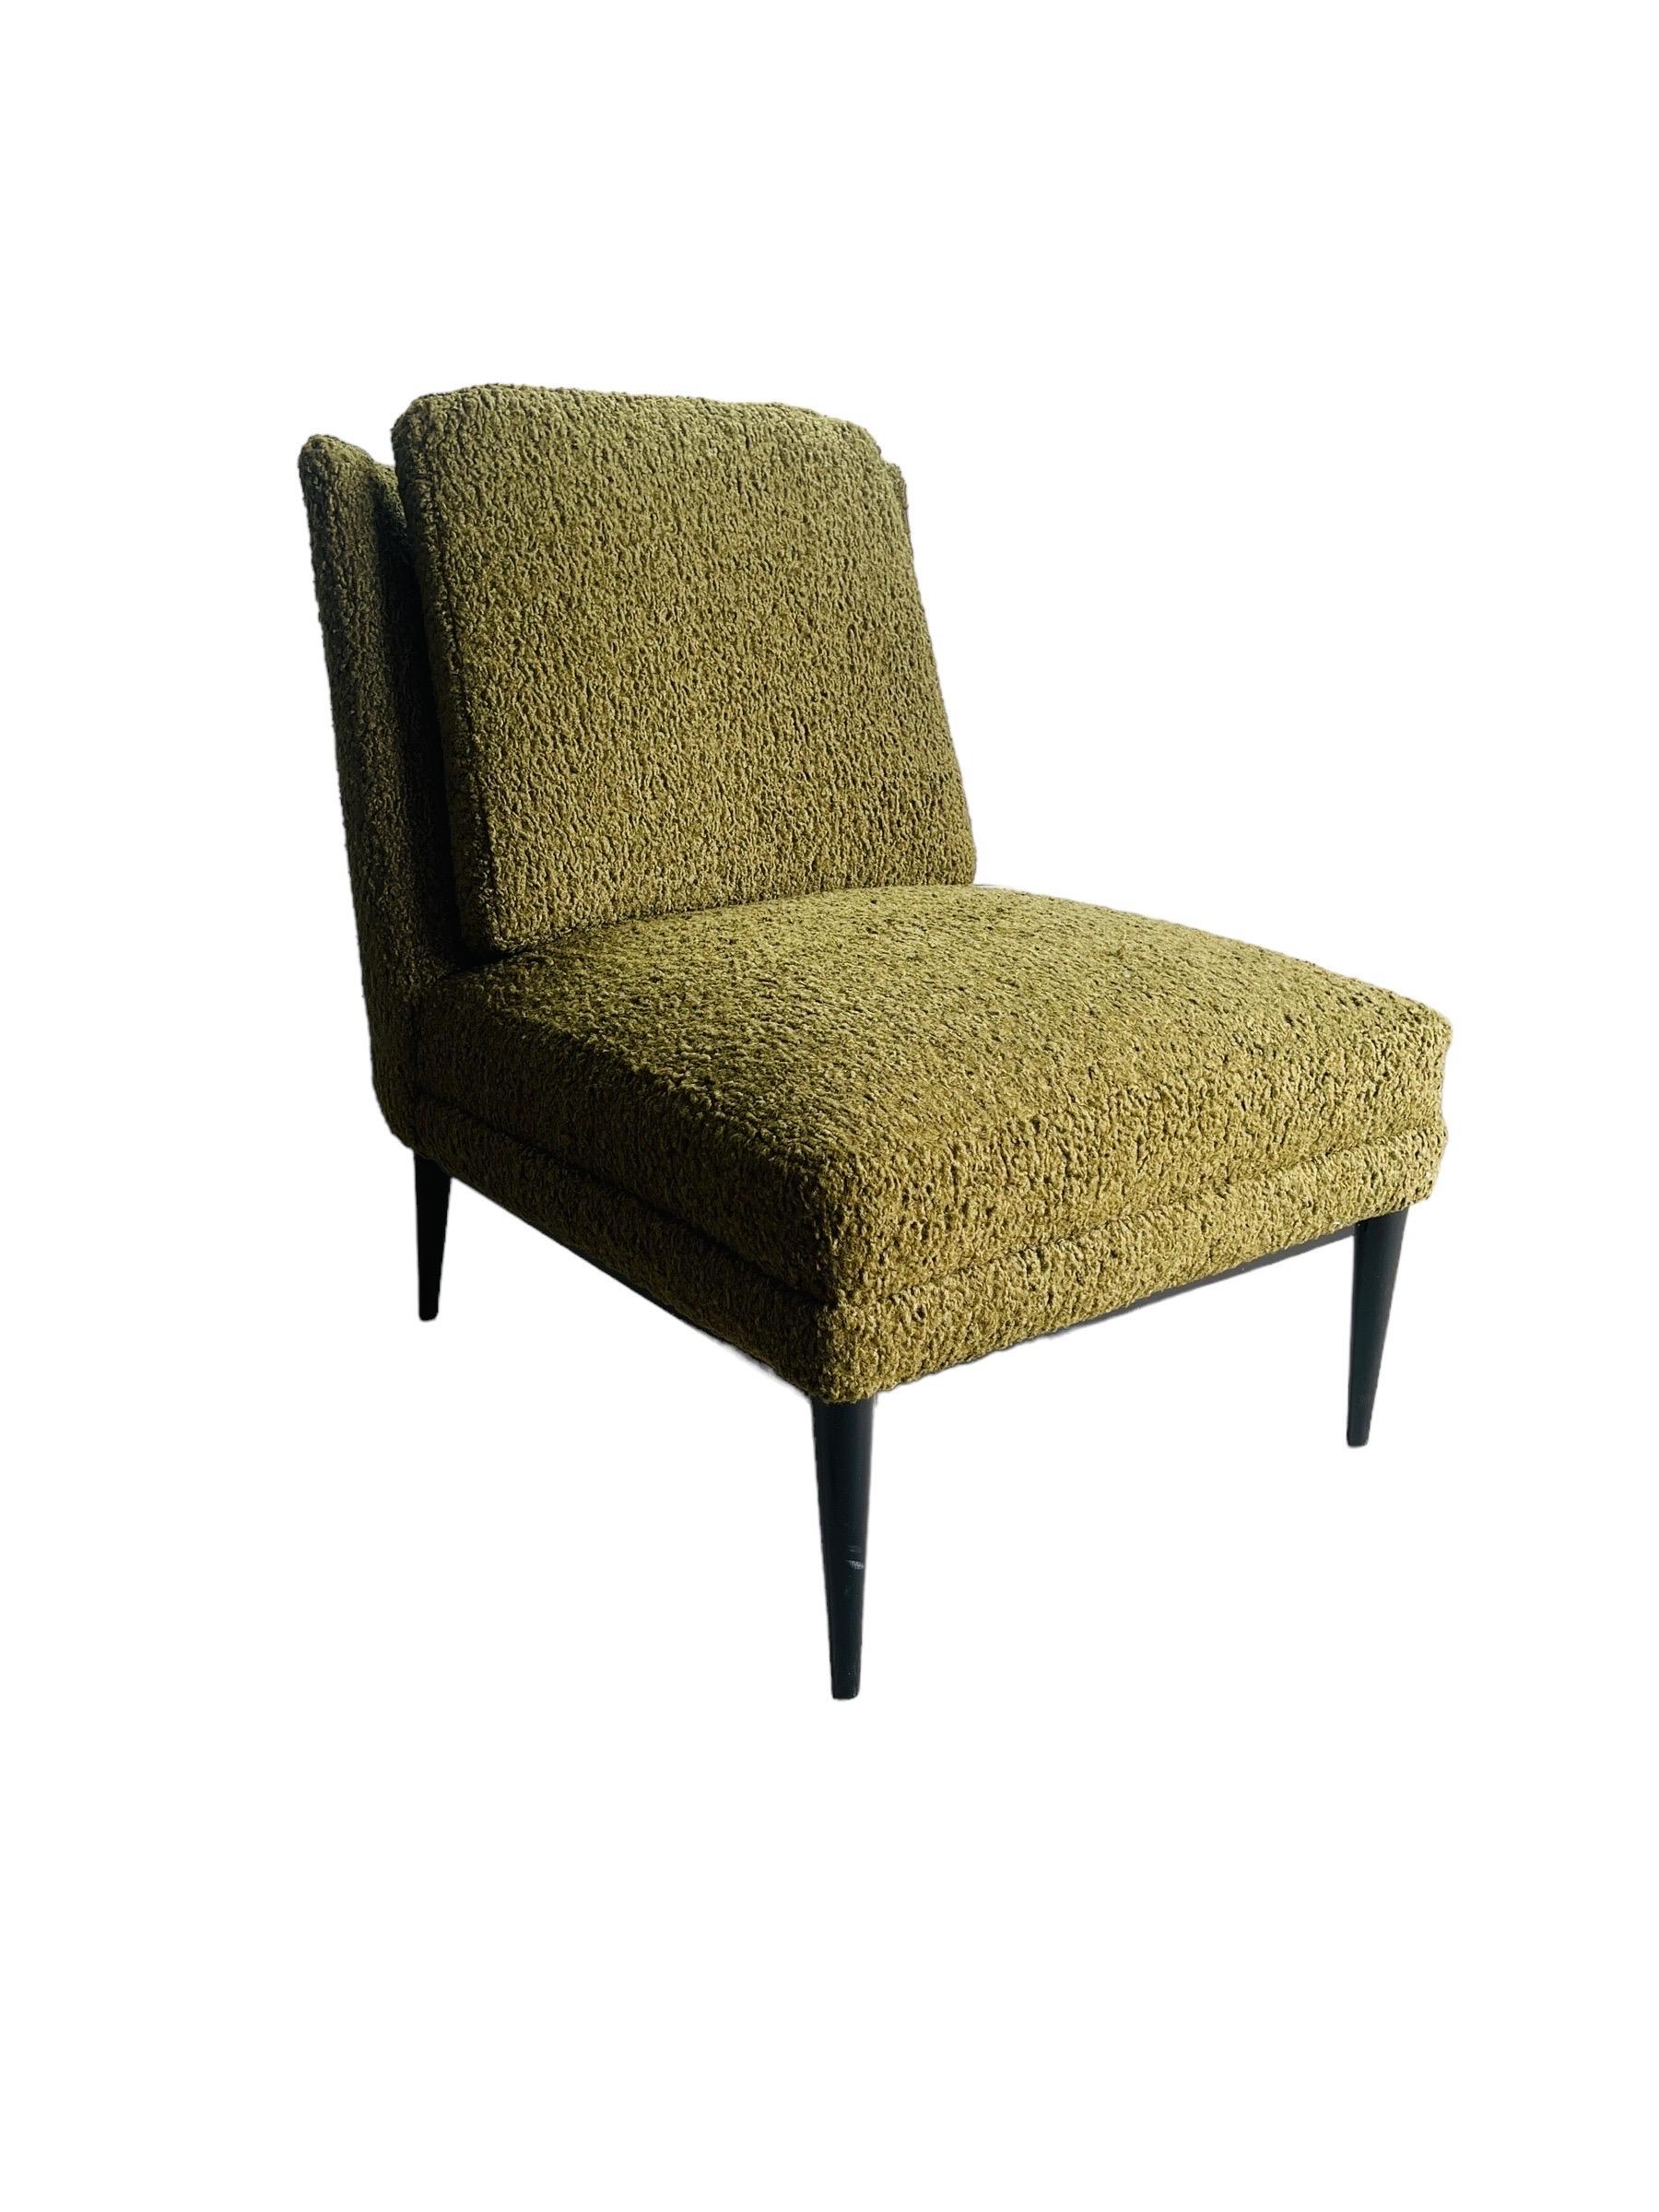 American Paul McCobb Slipper Chair Mid Century  For Sale